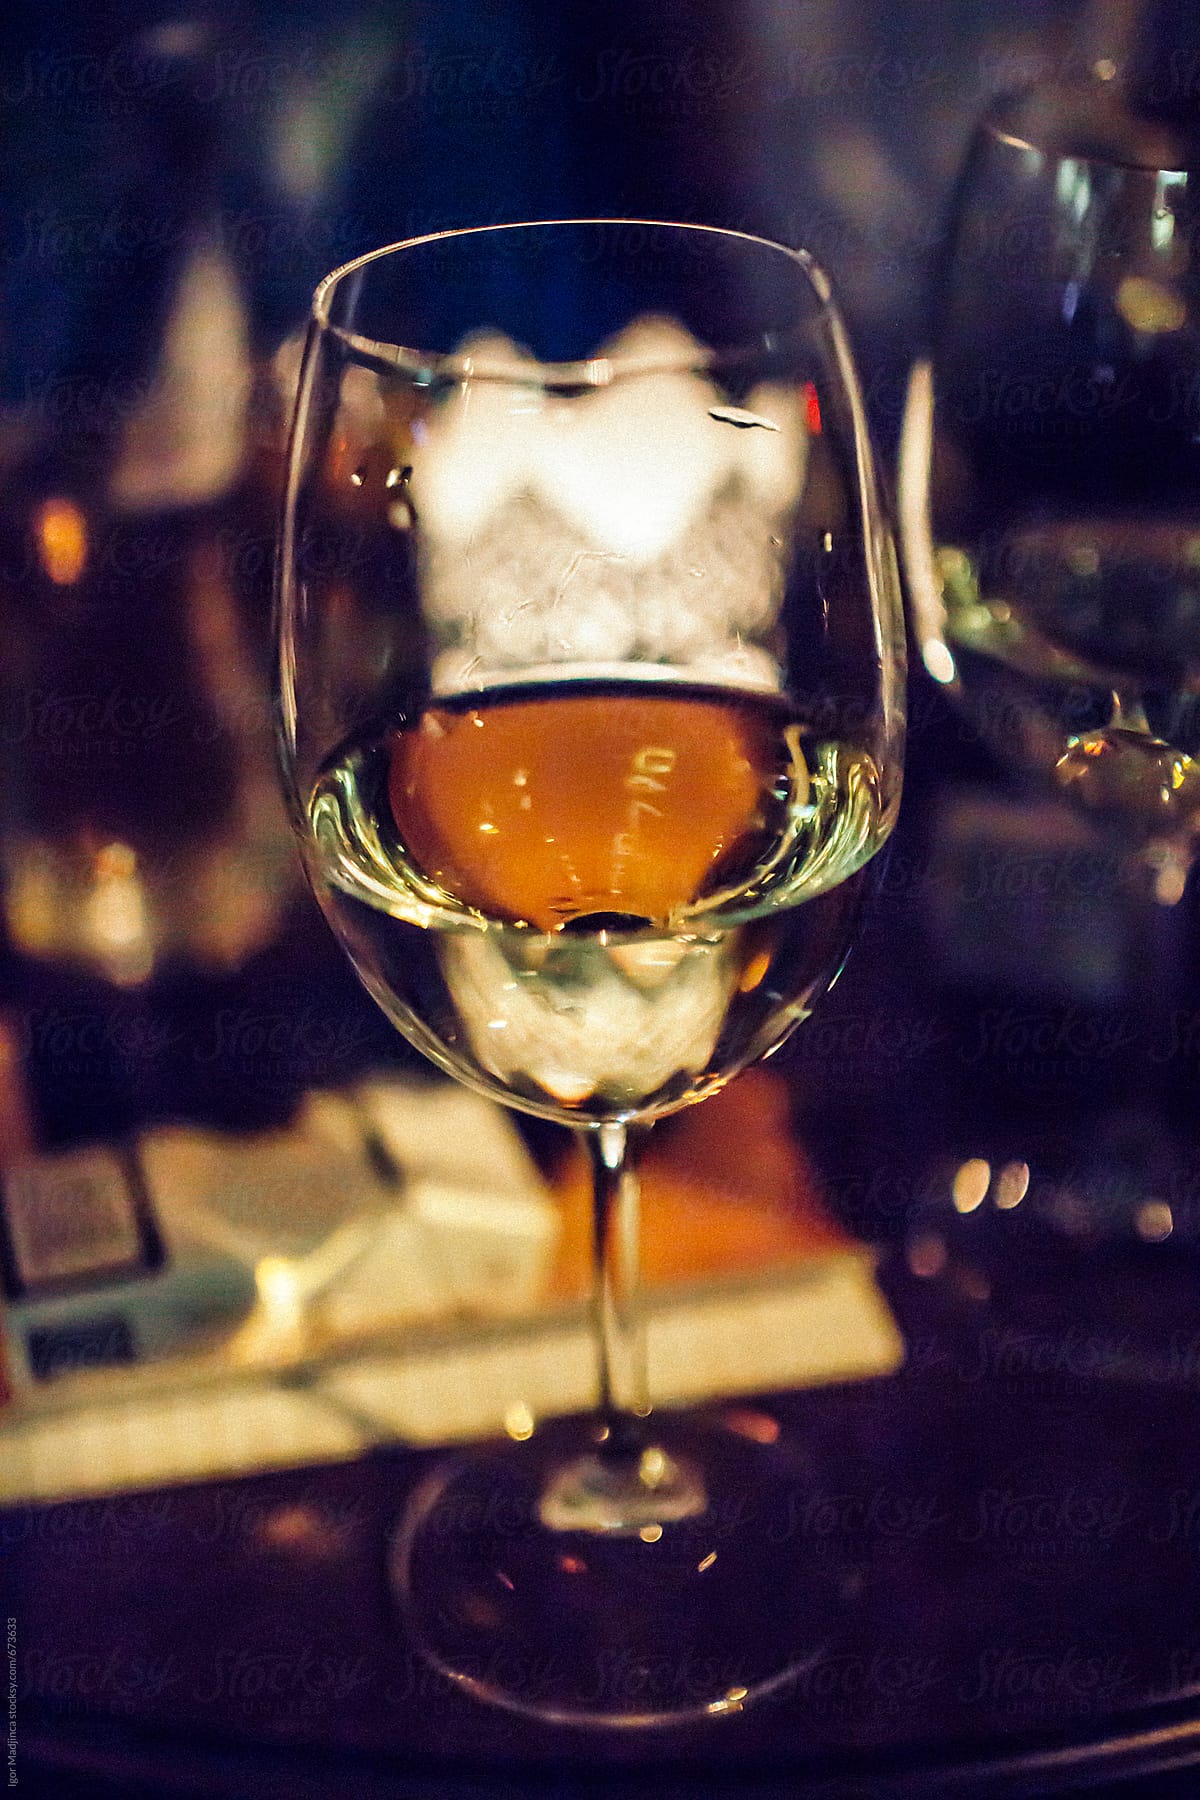 a glass of wine in a nightclub